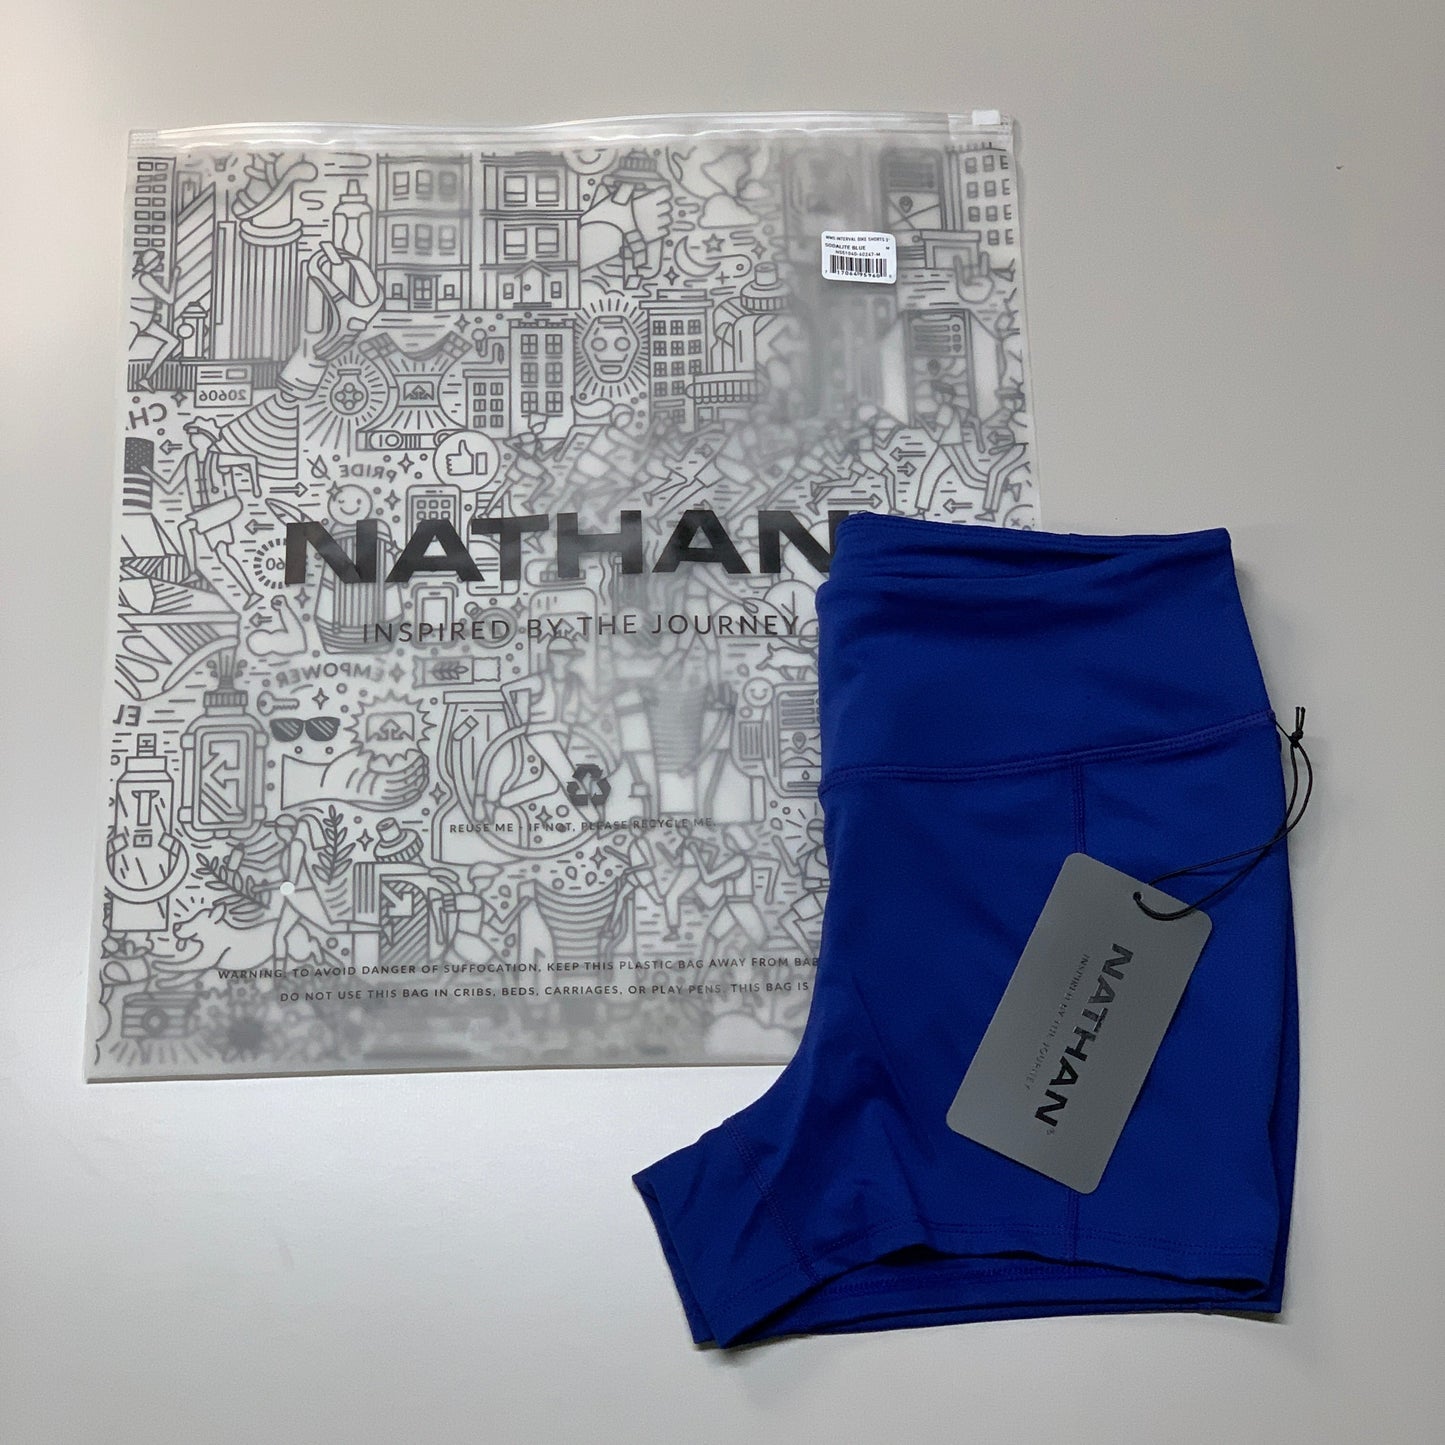 NATHAN Interval 3" Inseam Bike Short Women's Sodalite Blue Sz L NS51040-60247-L